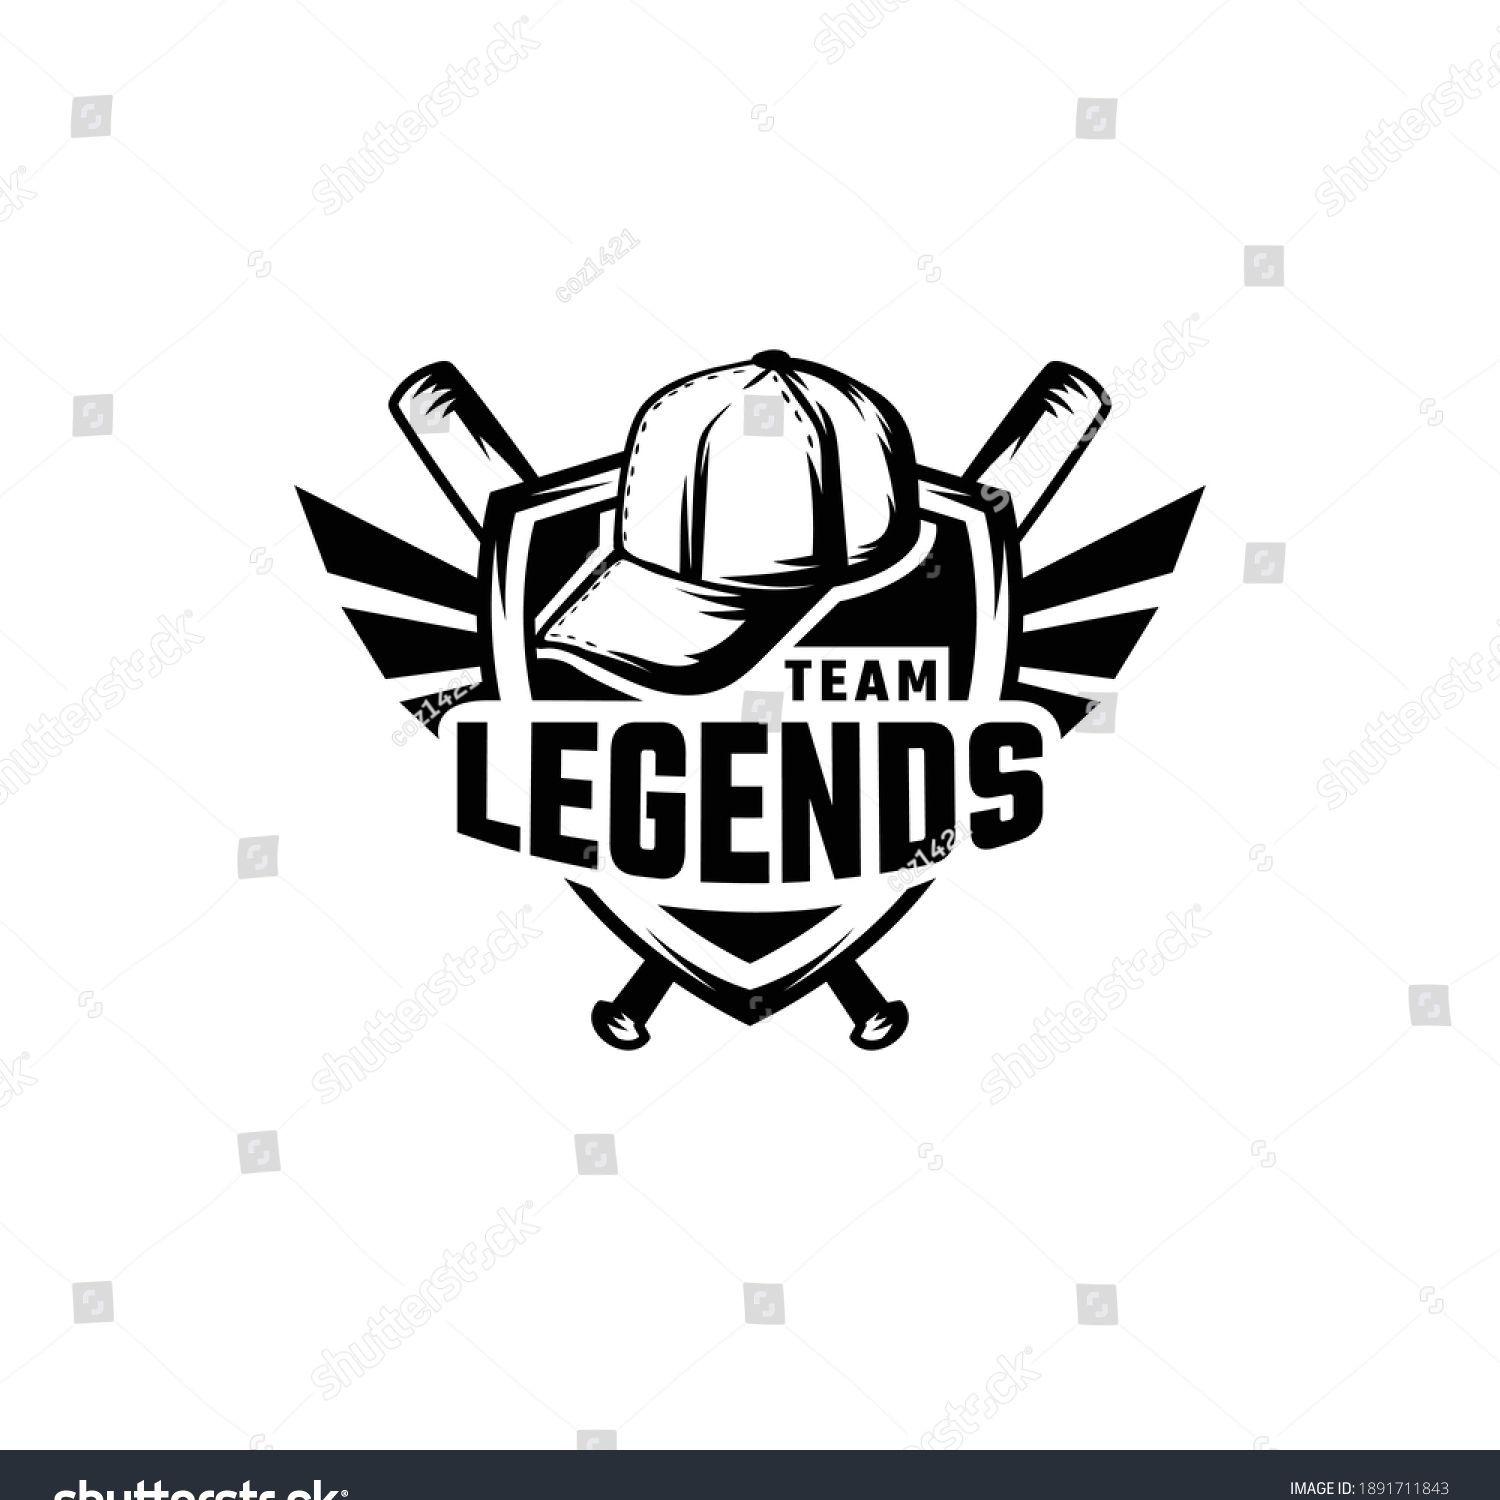 Player legend0001 avatar